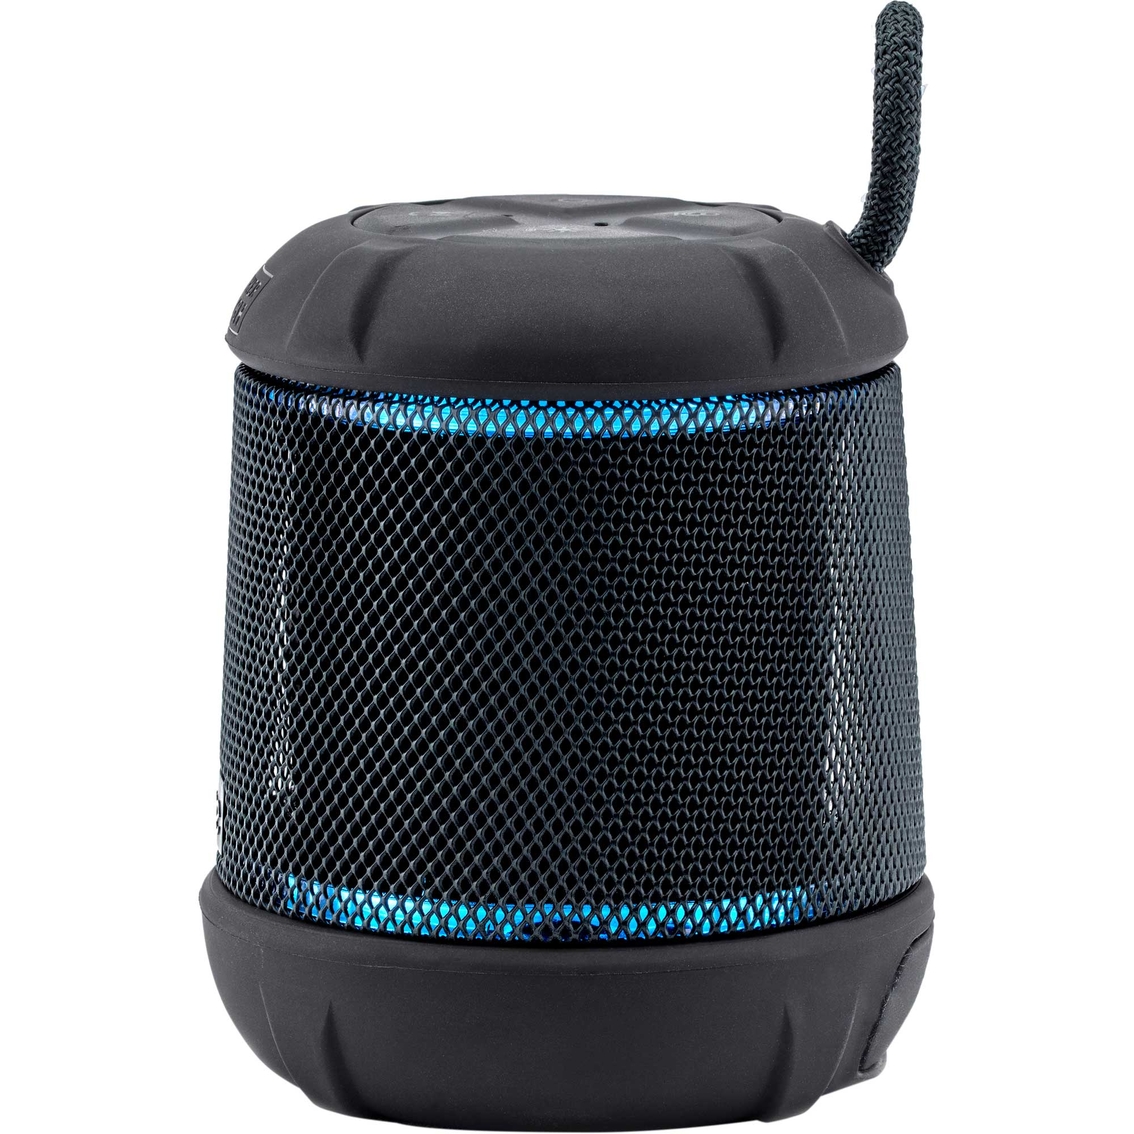 iHome PlayTough Waterproof, Shockproof Bluetooth Speaker with Accent Lighting - Image 5 of 10